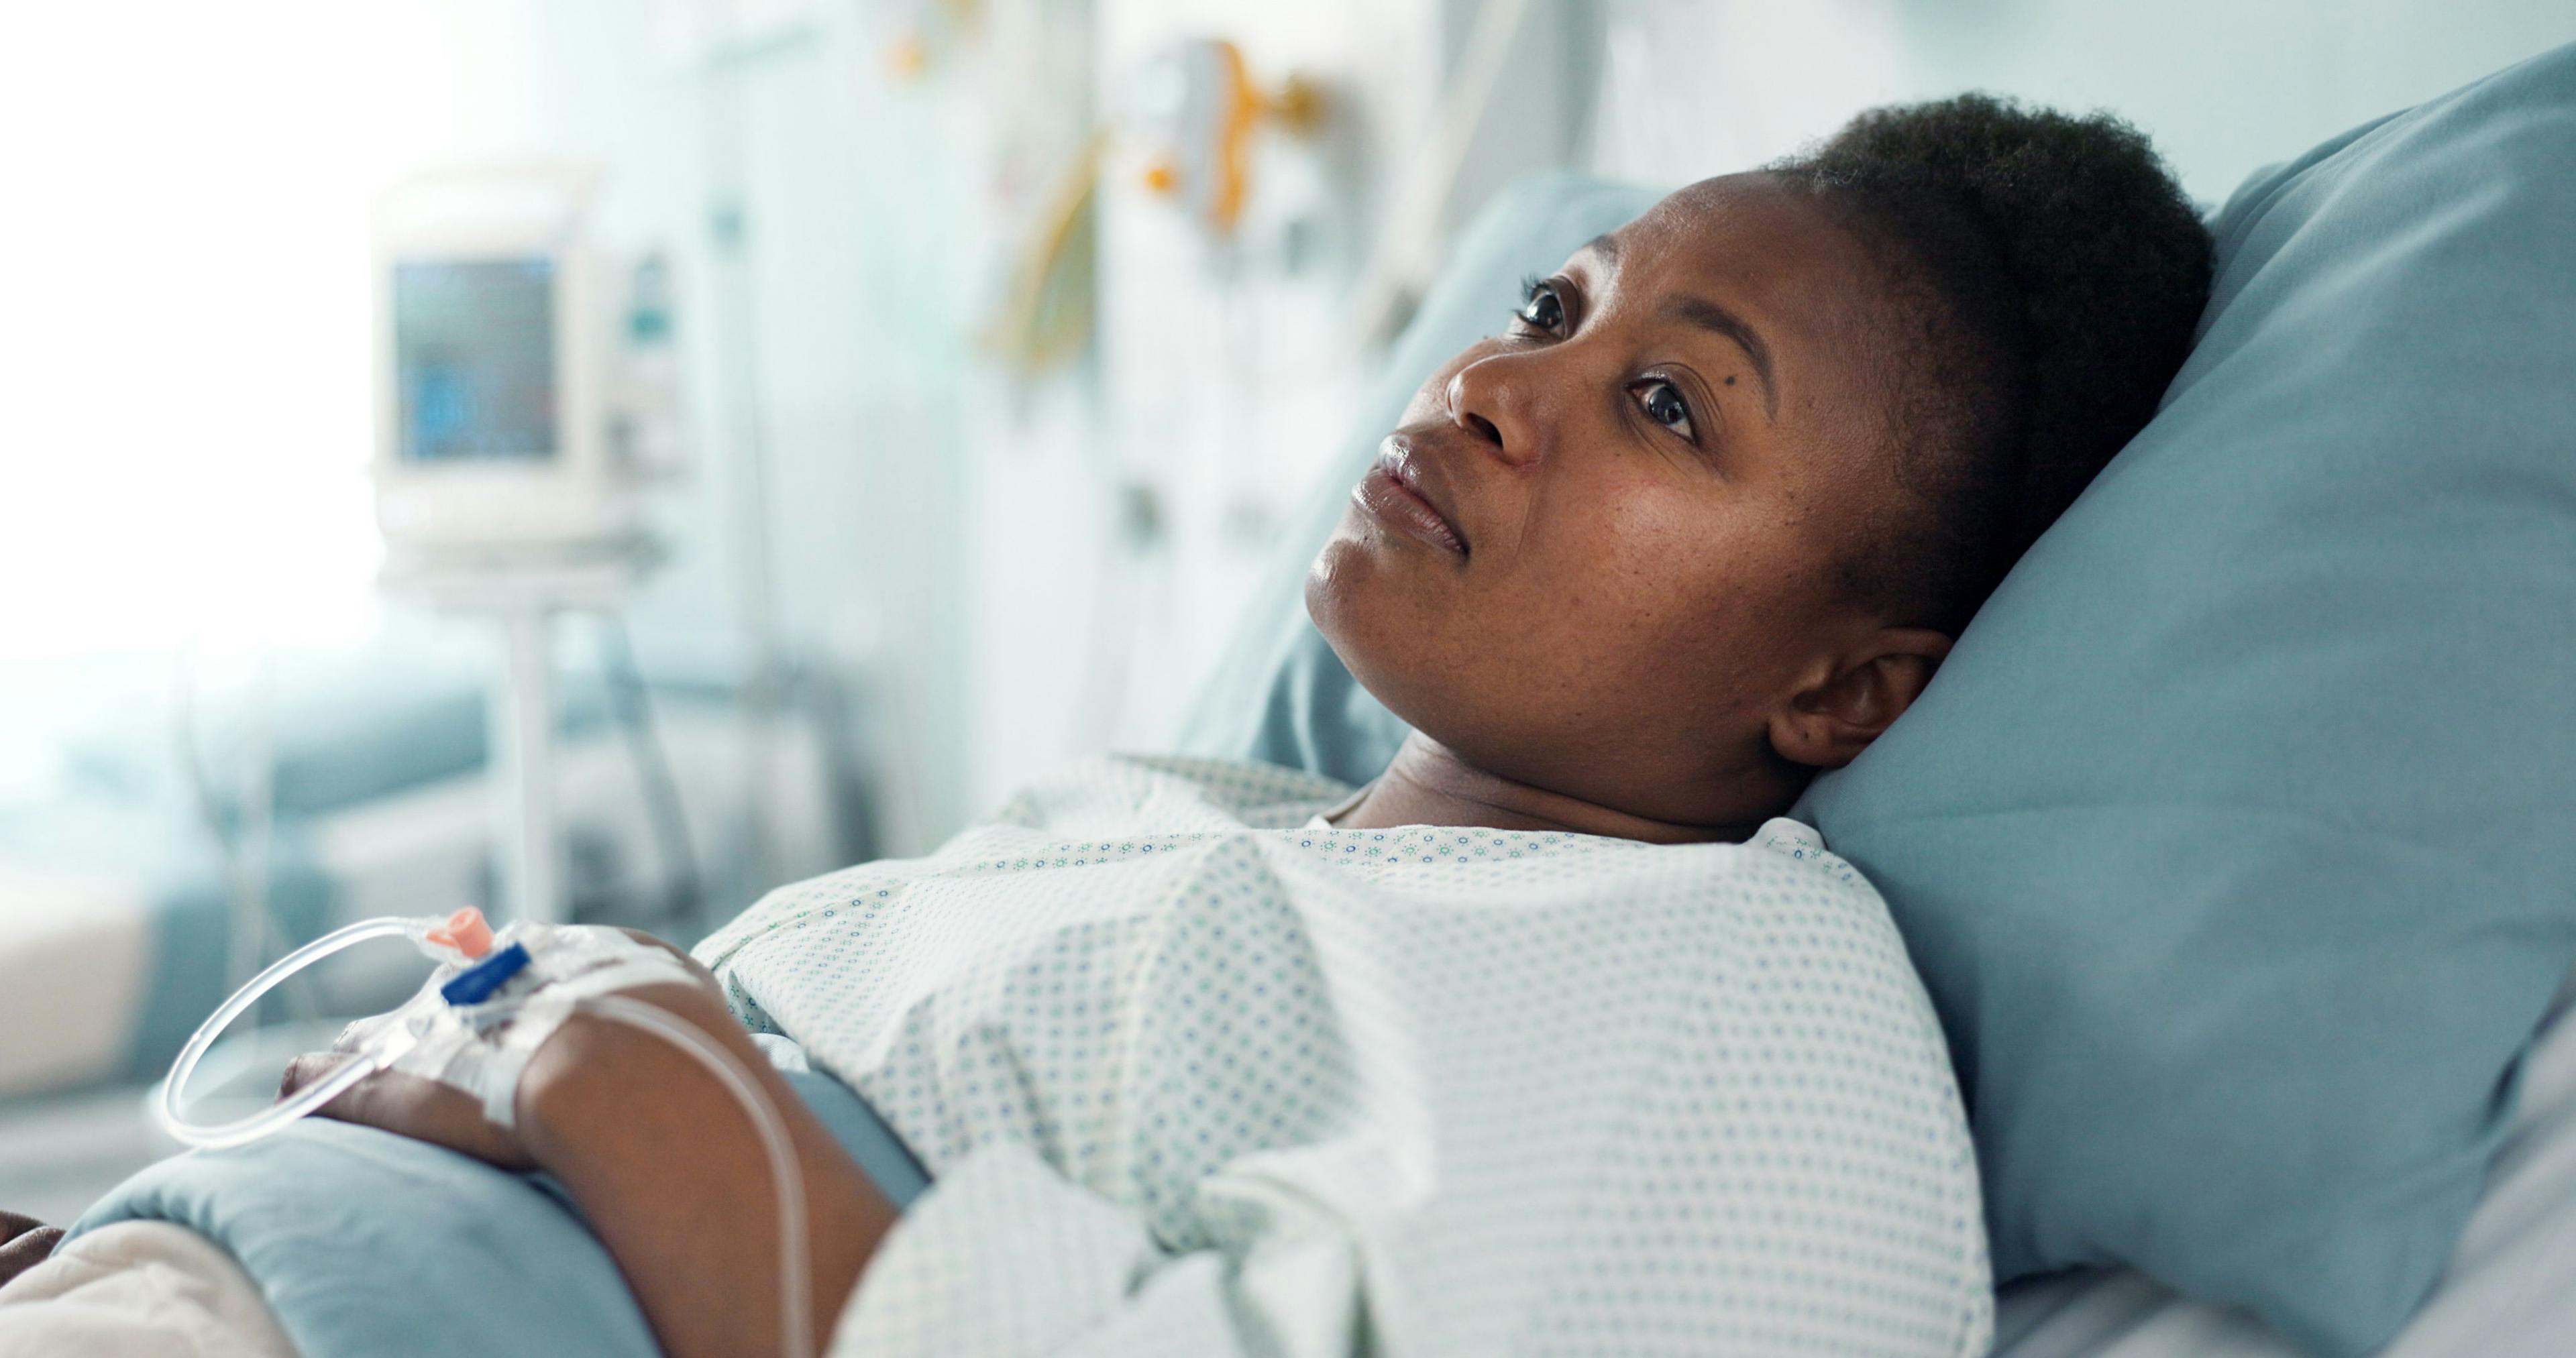 Black woman in hospital | Image credit: N F/peopleimages.com - stock.adobe.com